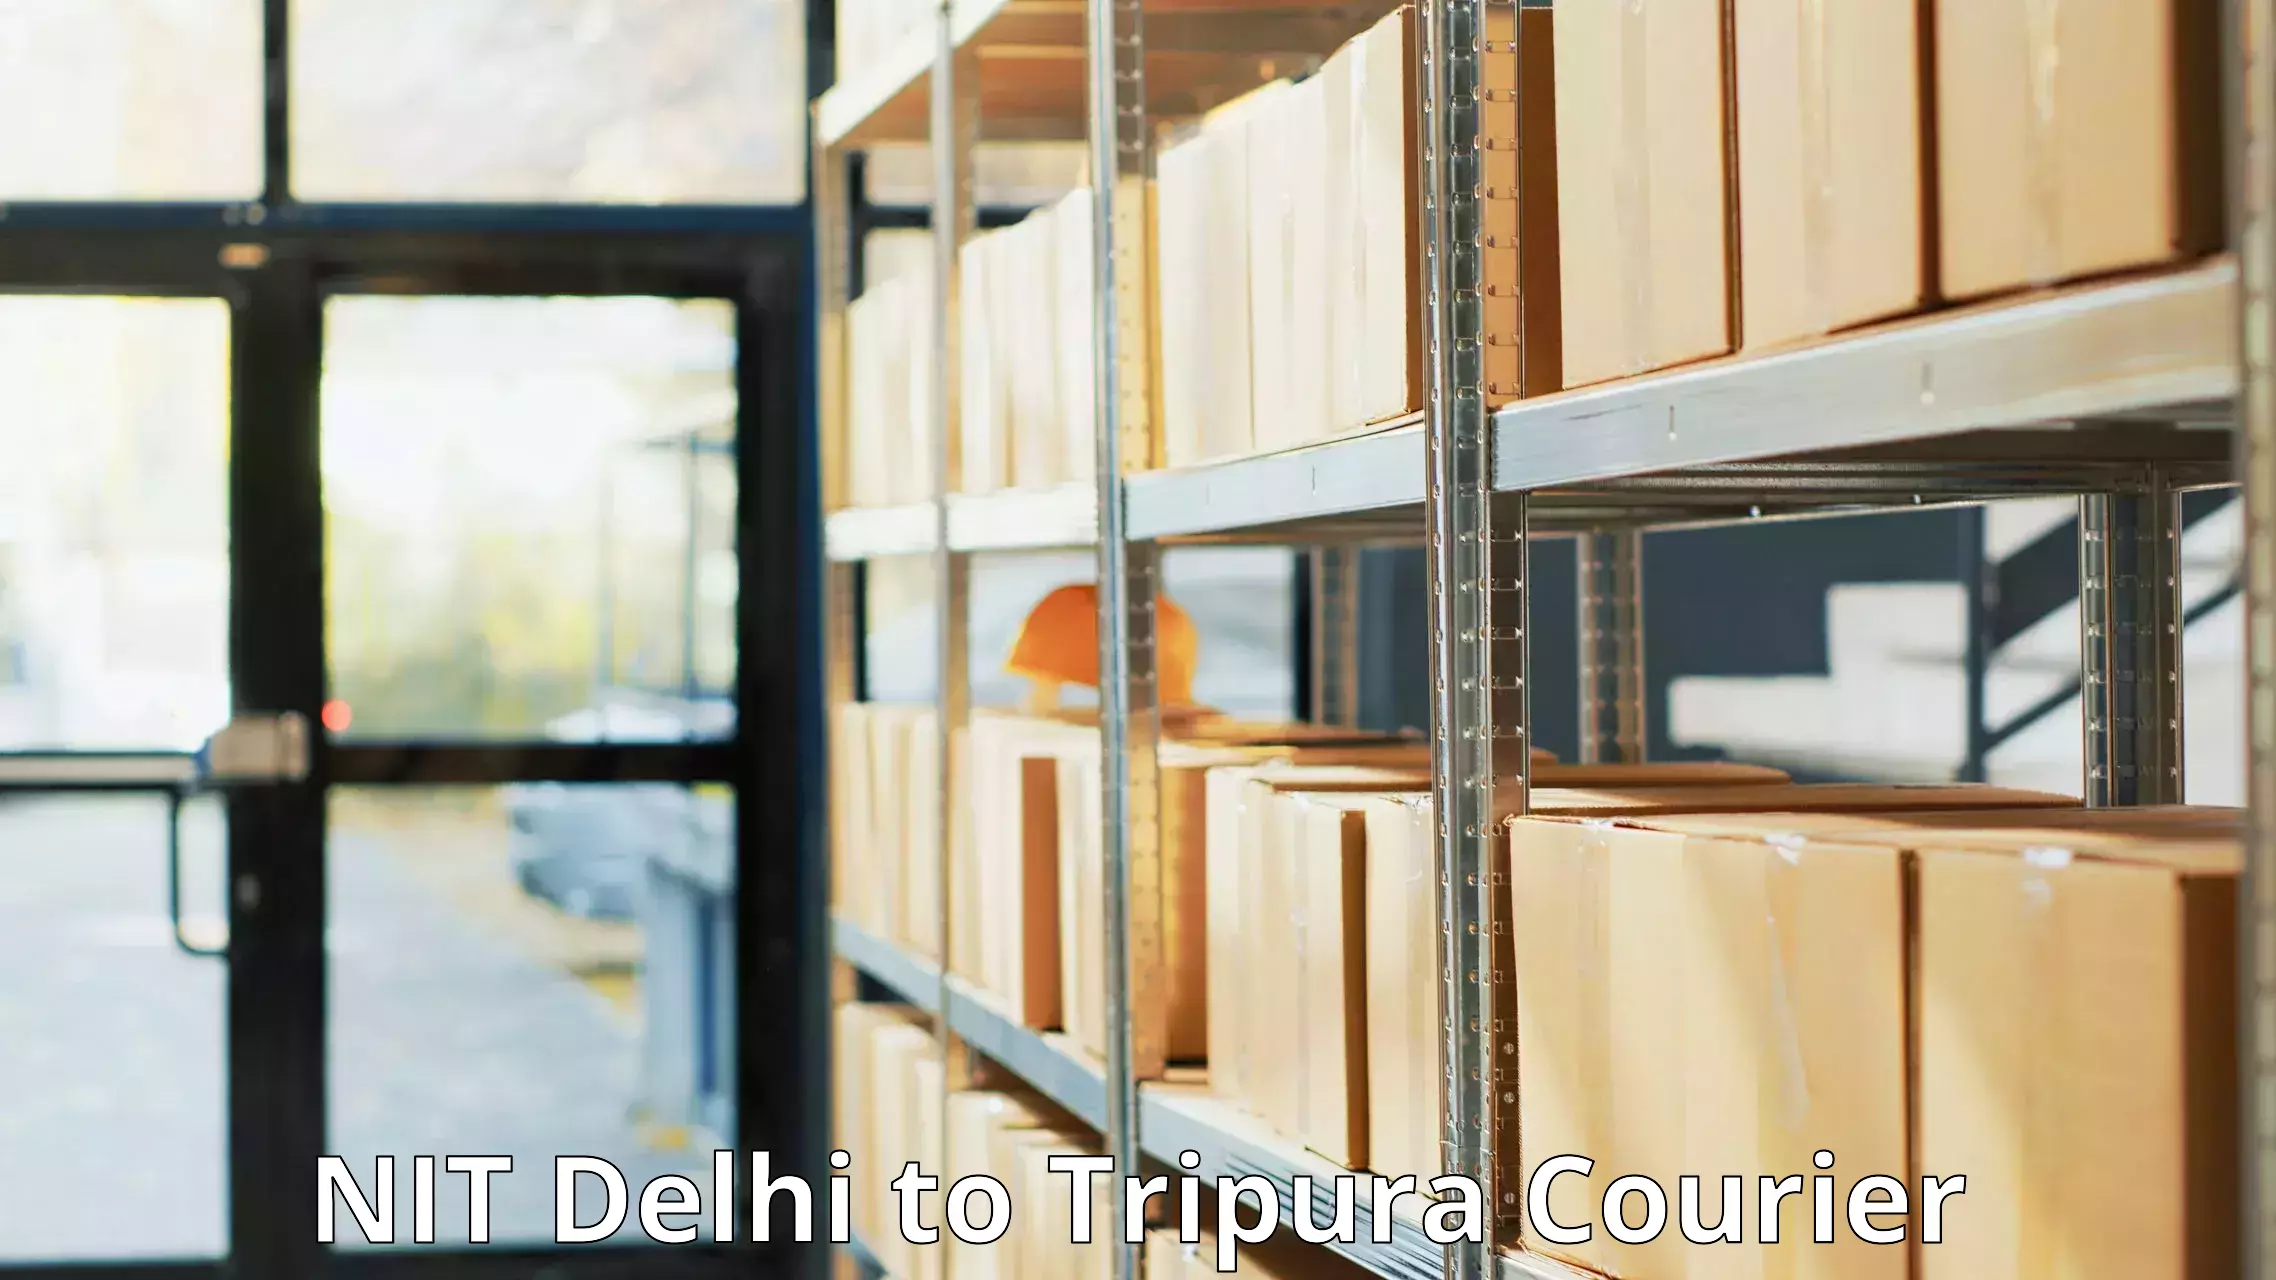 Courier service innovation NIT Delhi to Udaipur Tripura